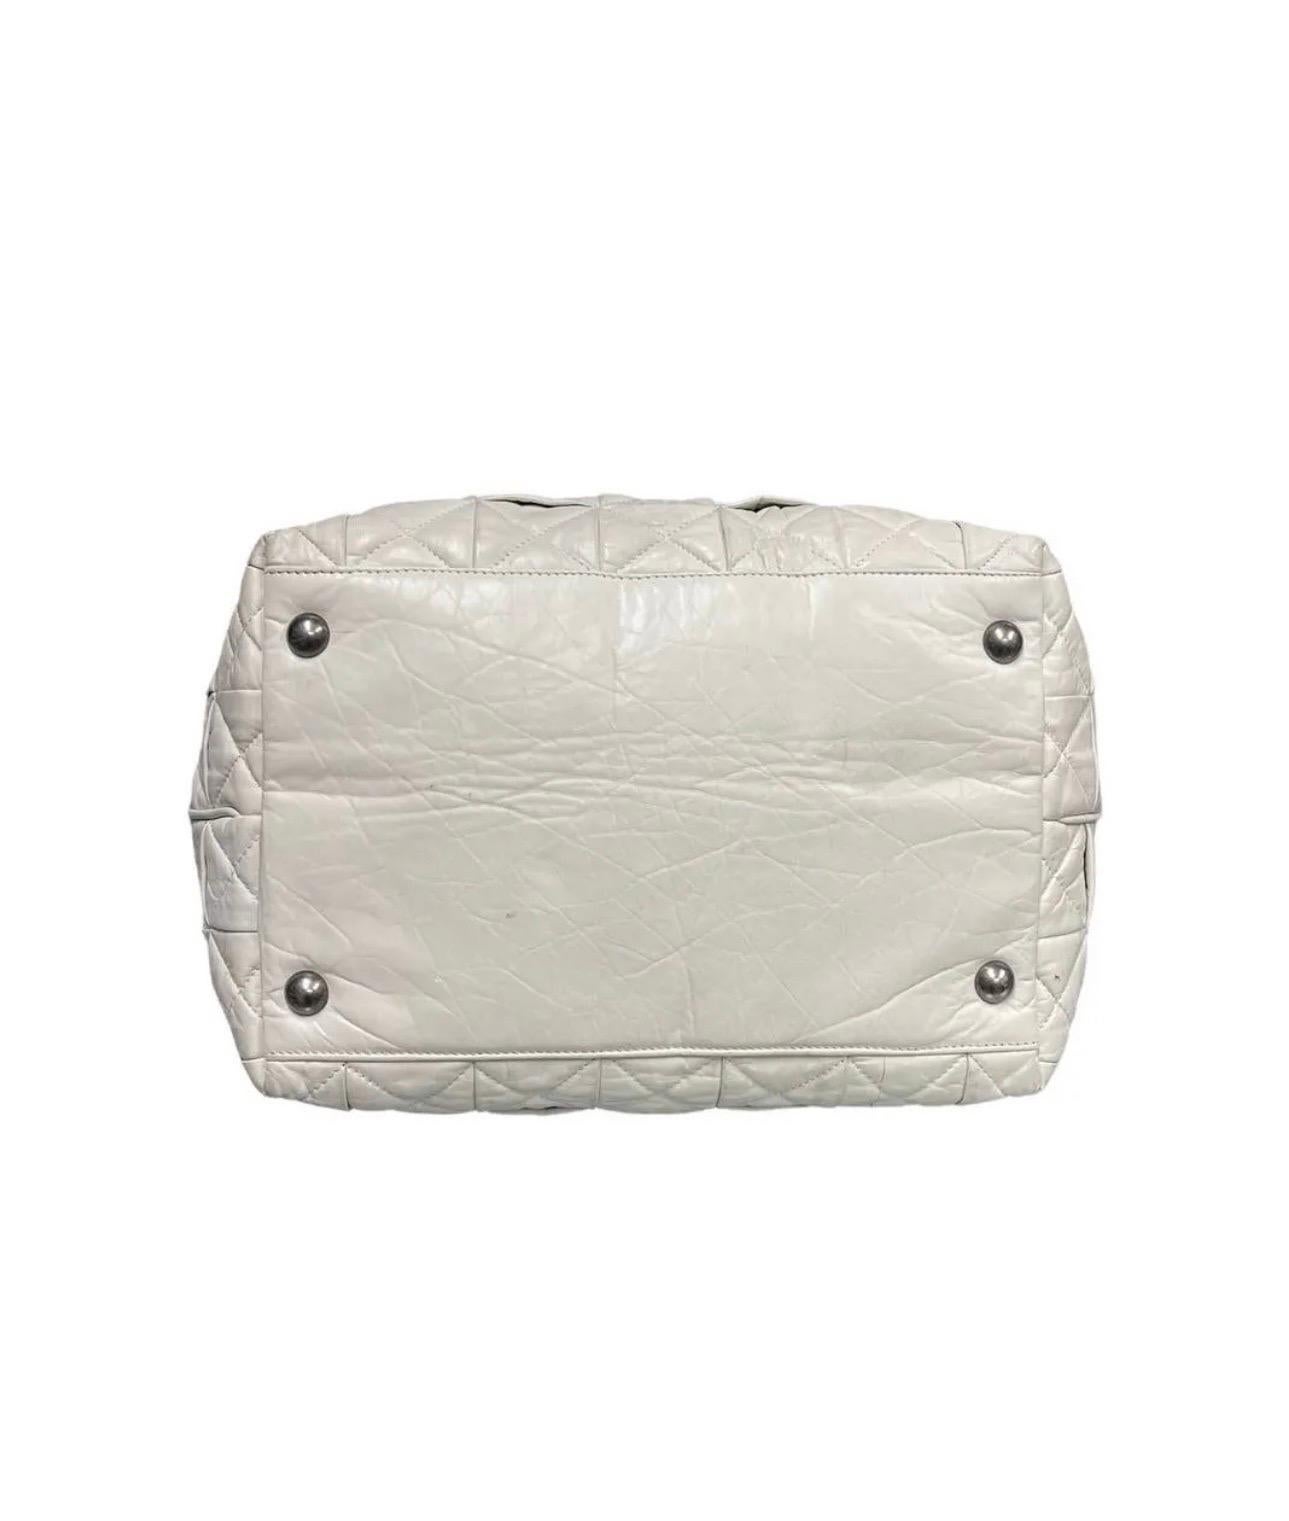 Gray 2008 Chanel White Braided Leather Shoulder Bag Bag